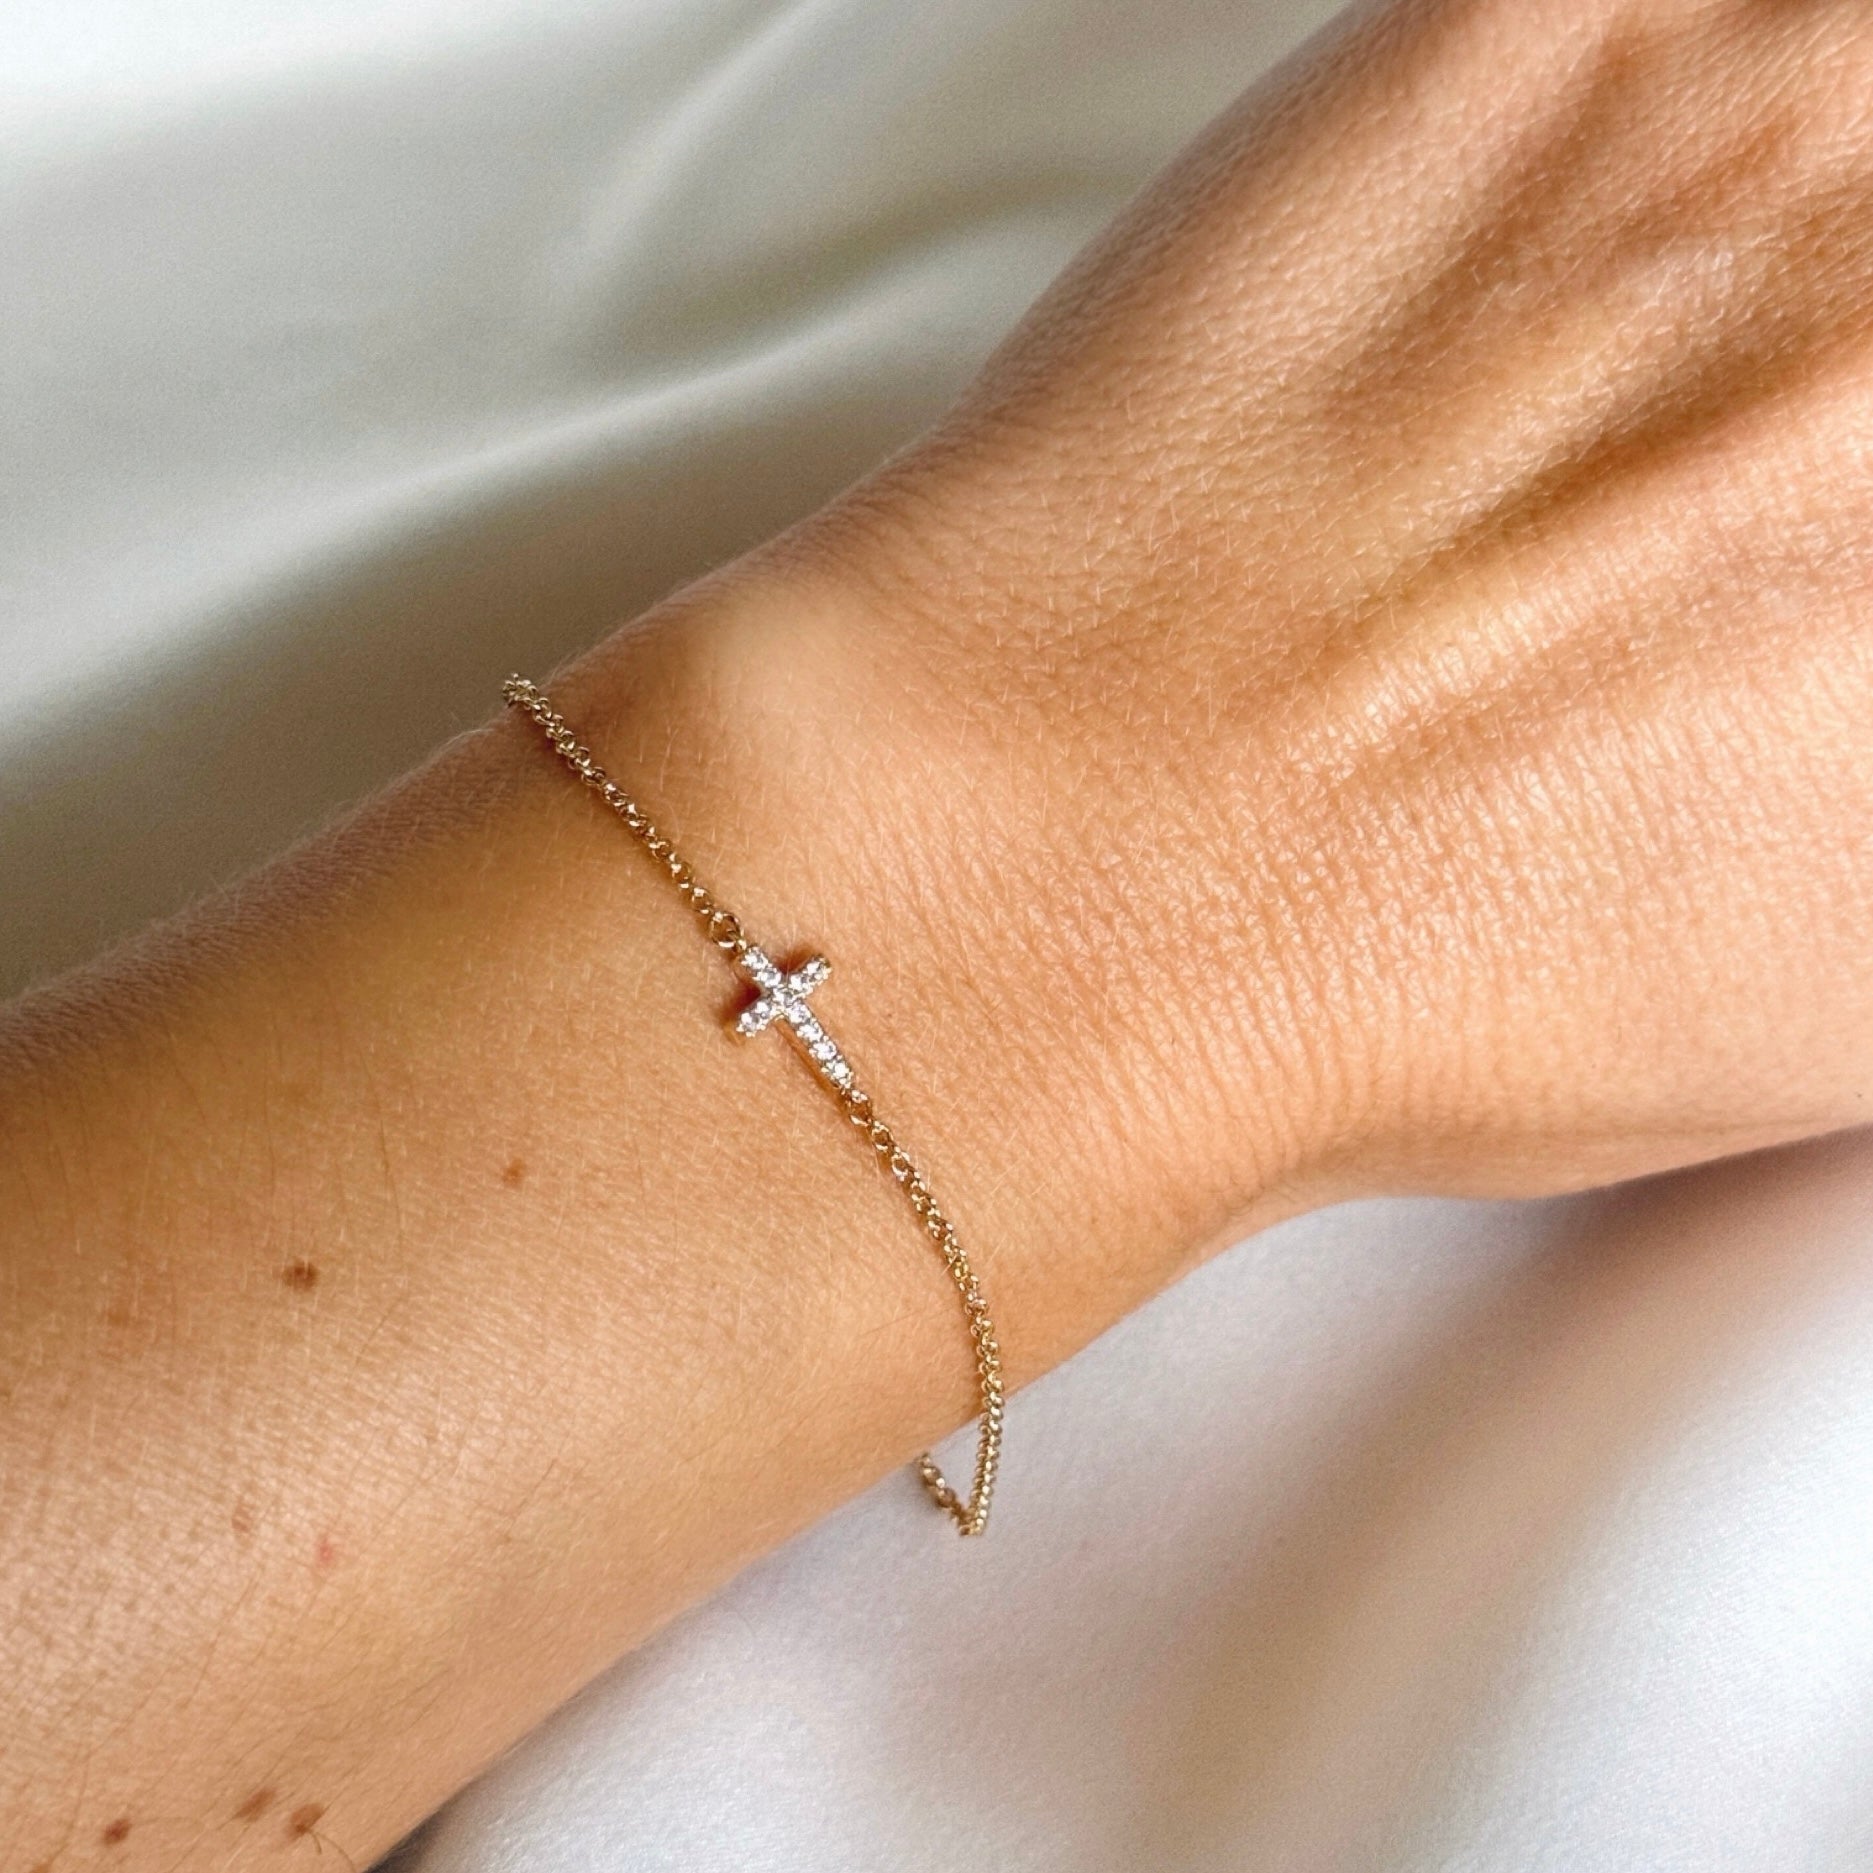 Gold-plated “Cross crimped” bracelet 